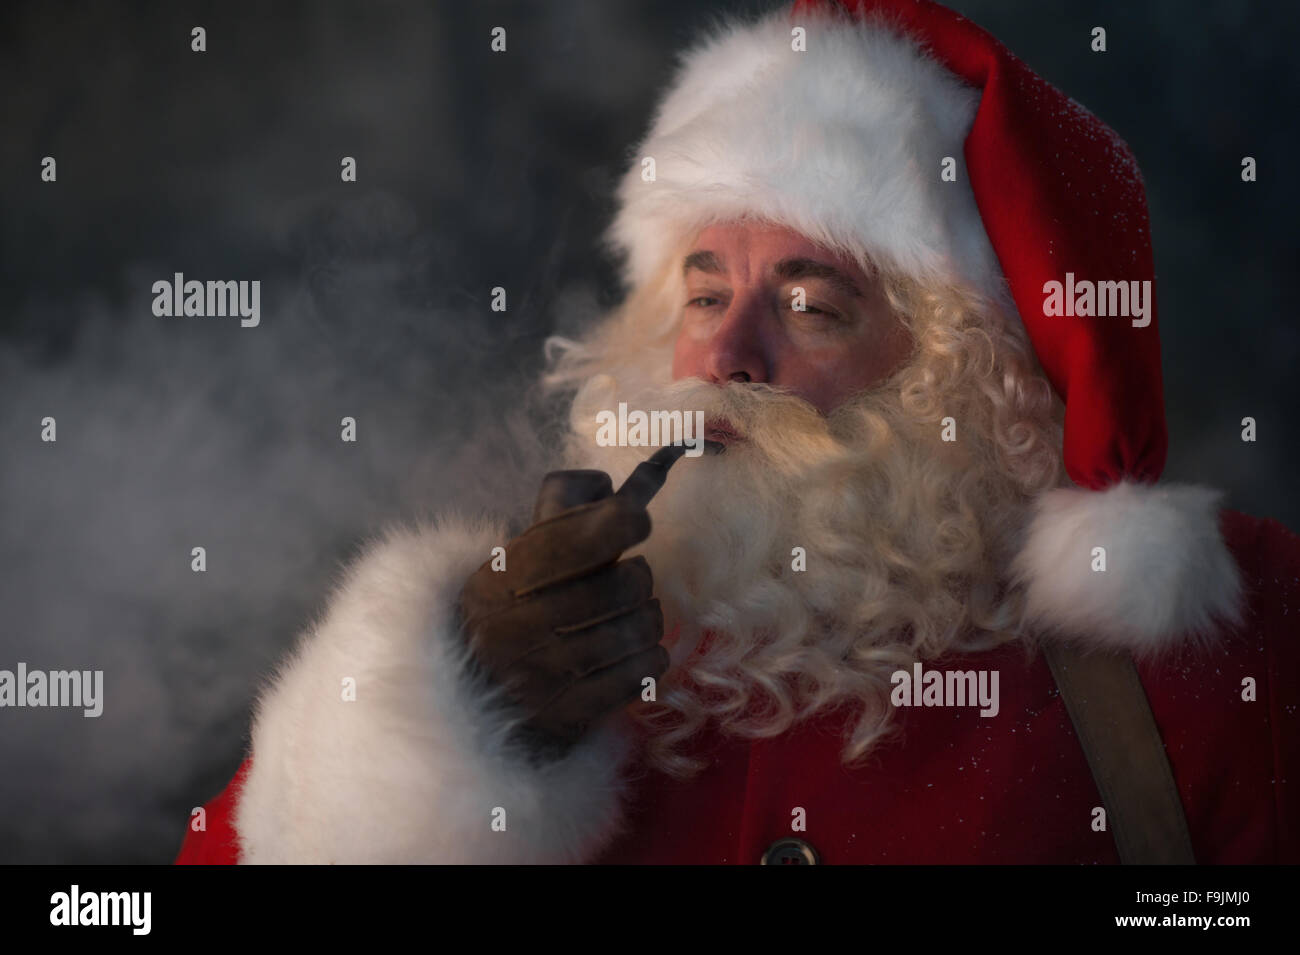 Santa Claus Smoking Closeup Portrait Stock Photo